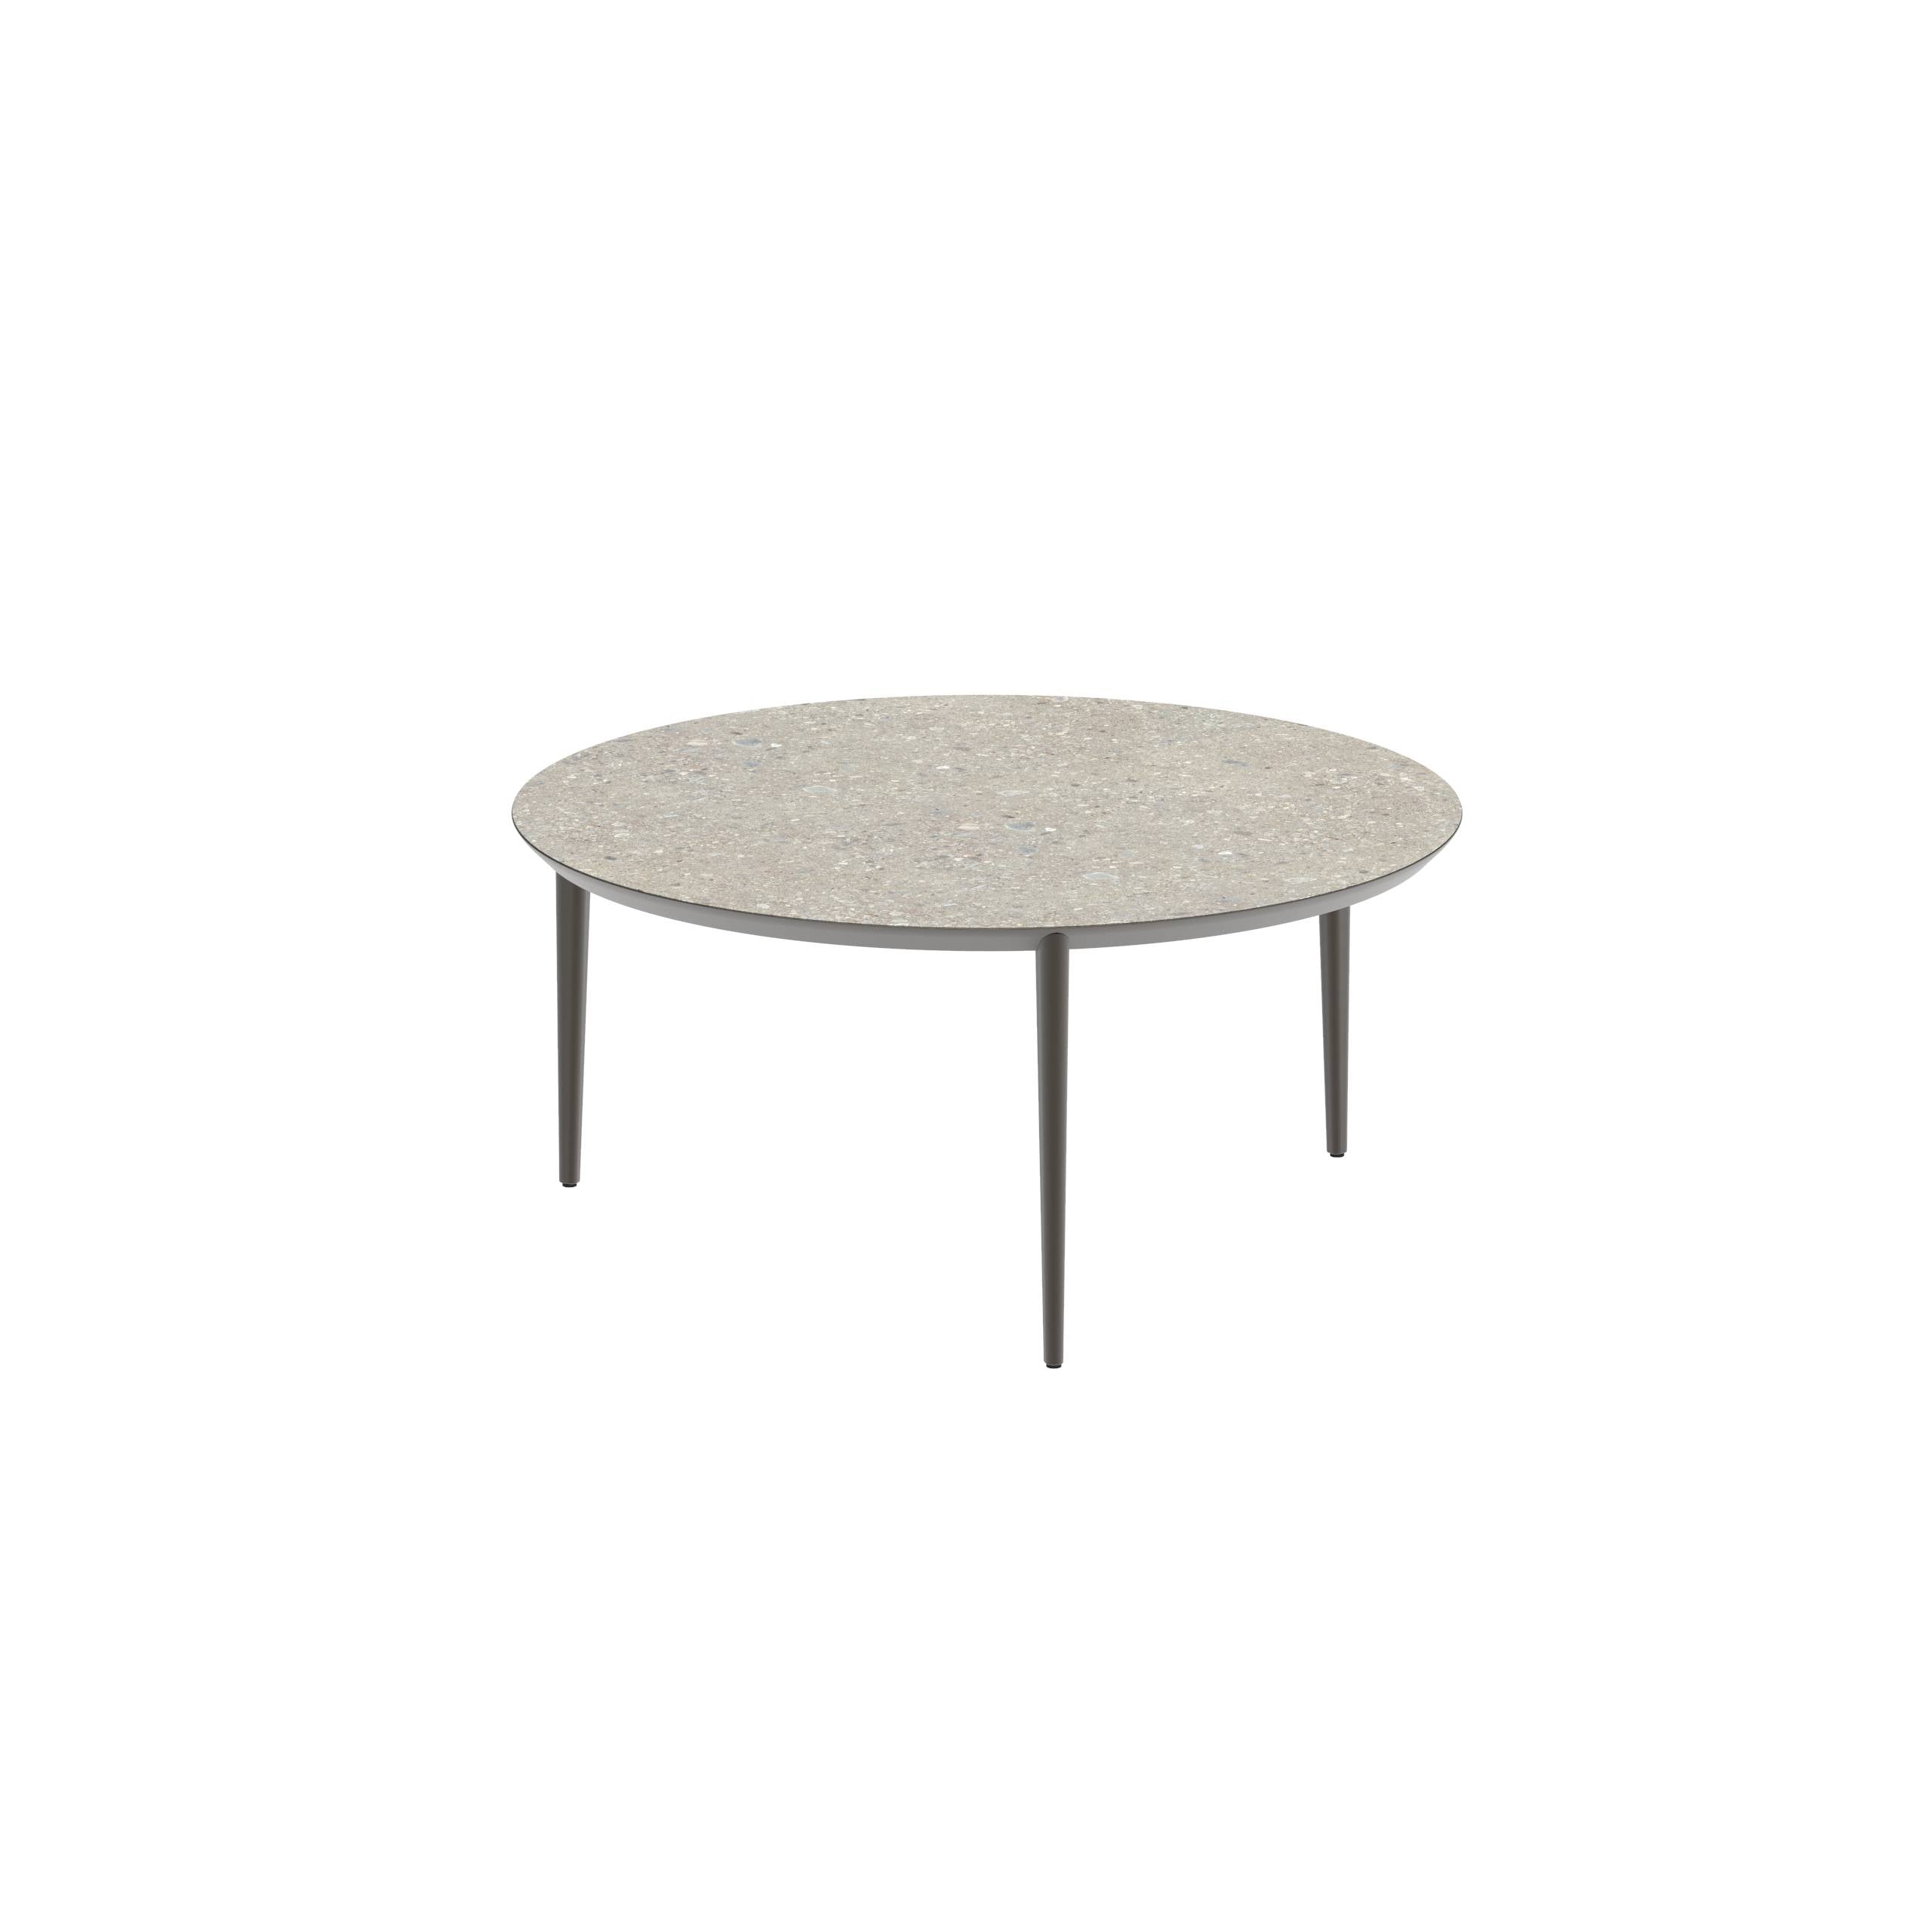 U-Nite Table Round Ø 160cm Alu Legs Bronze - Table Top Ceramic Ceppo Dolomitica